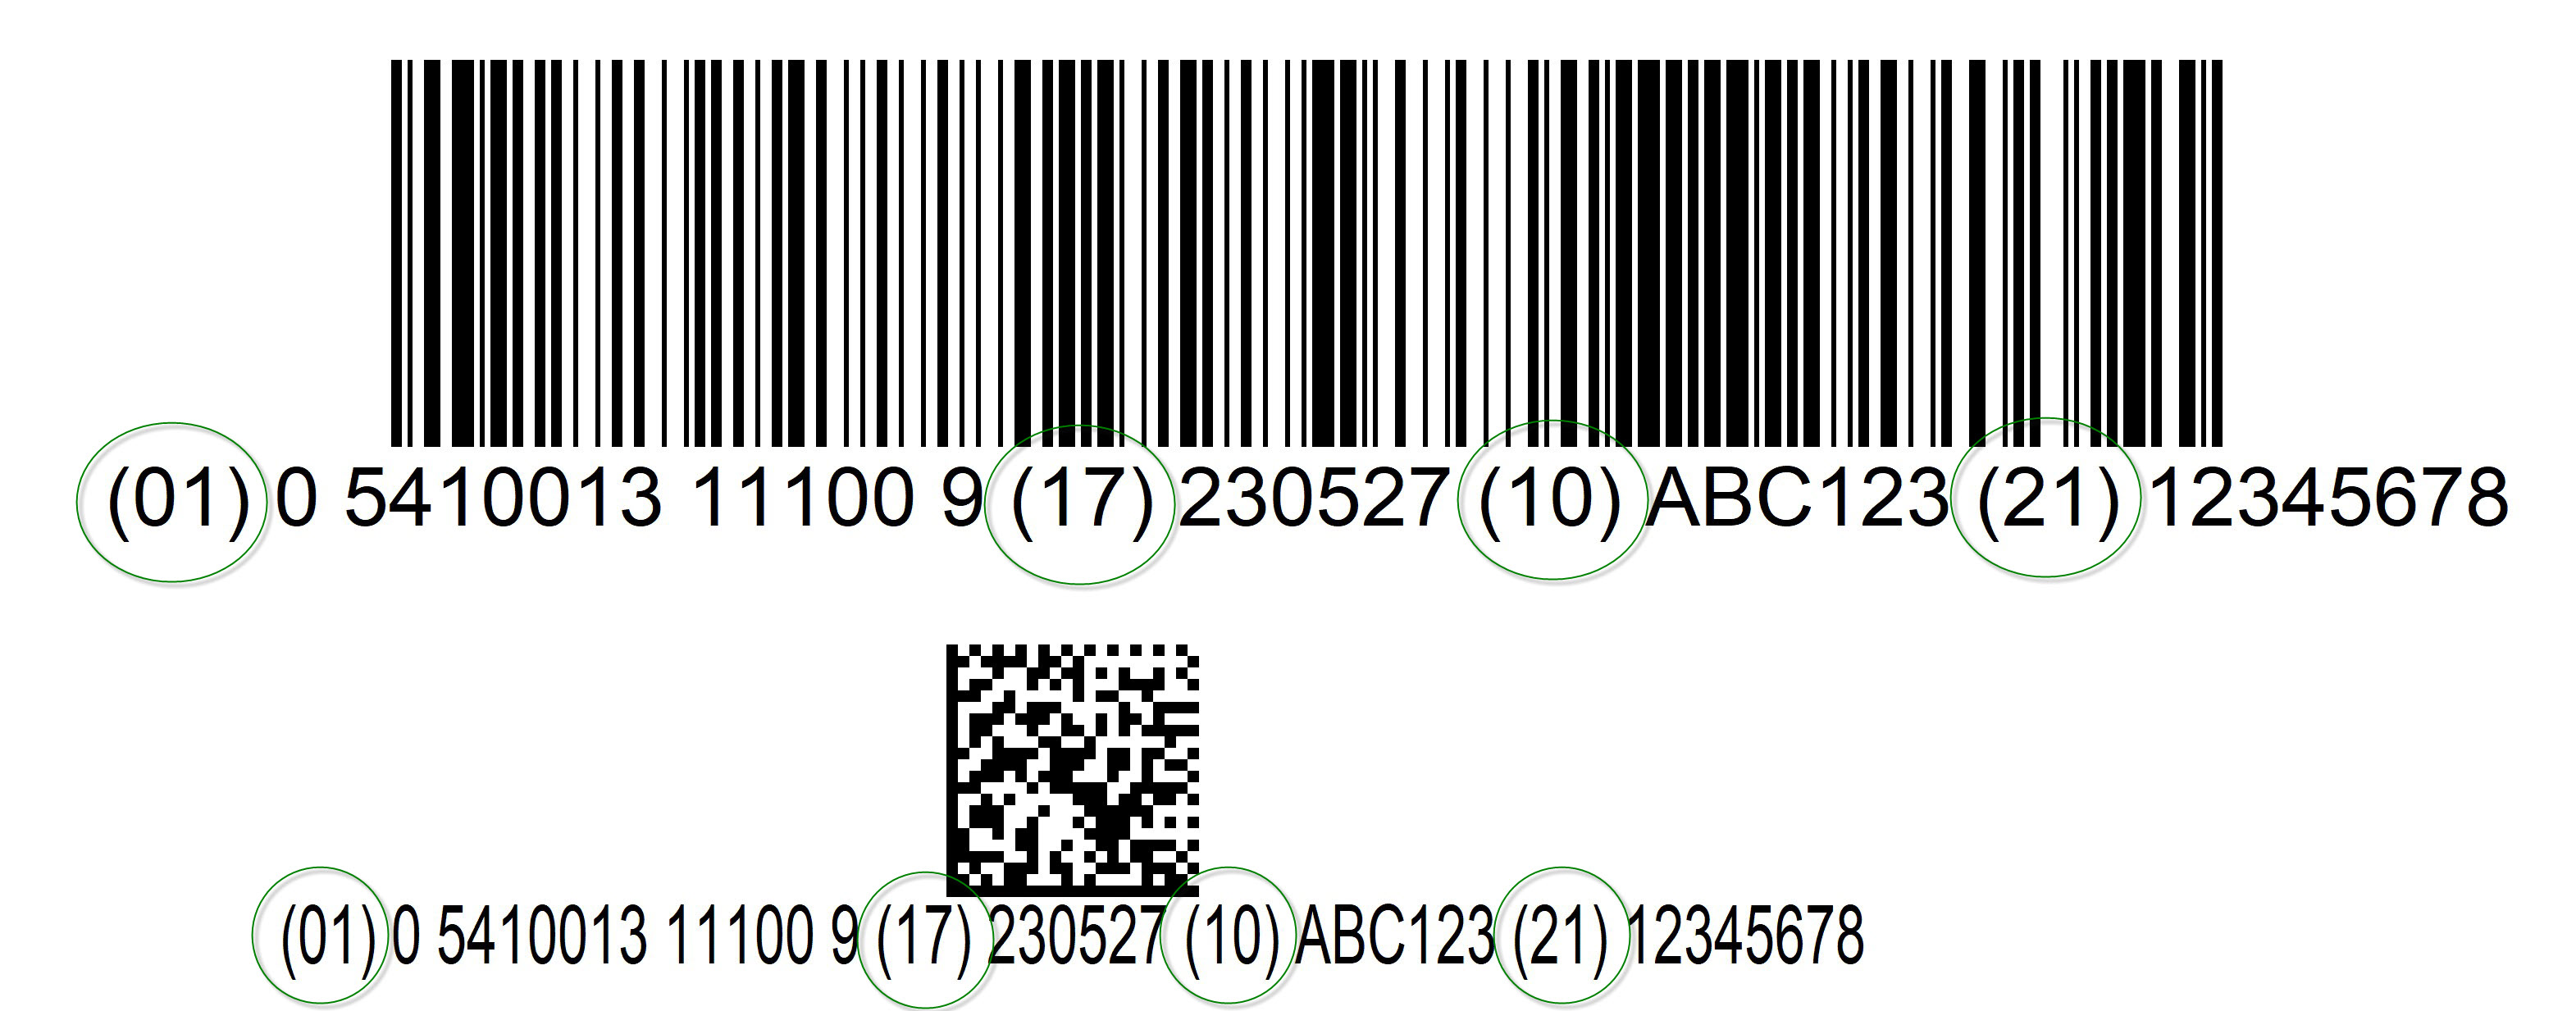 Barcodes Dec 2020